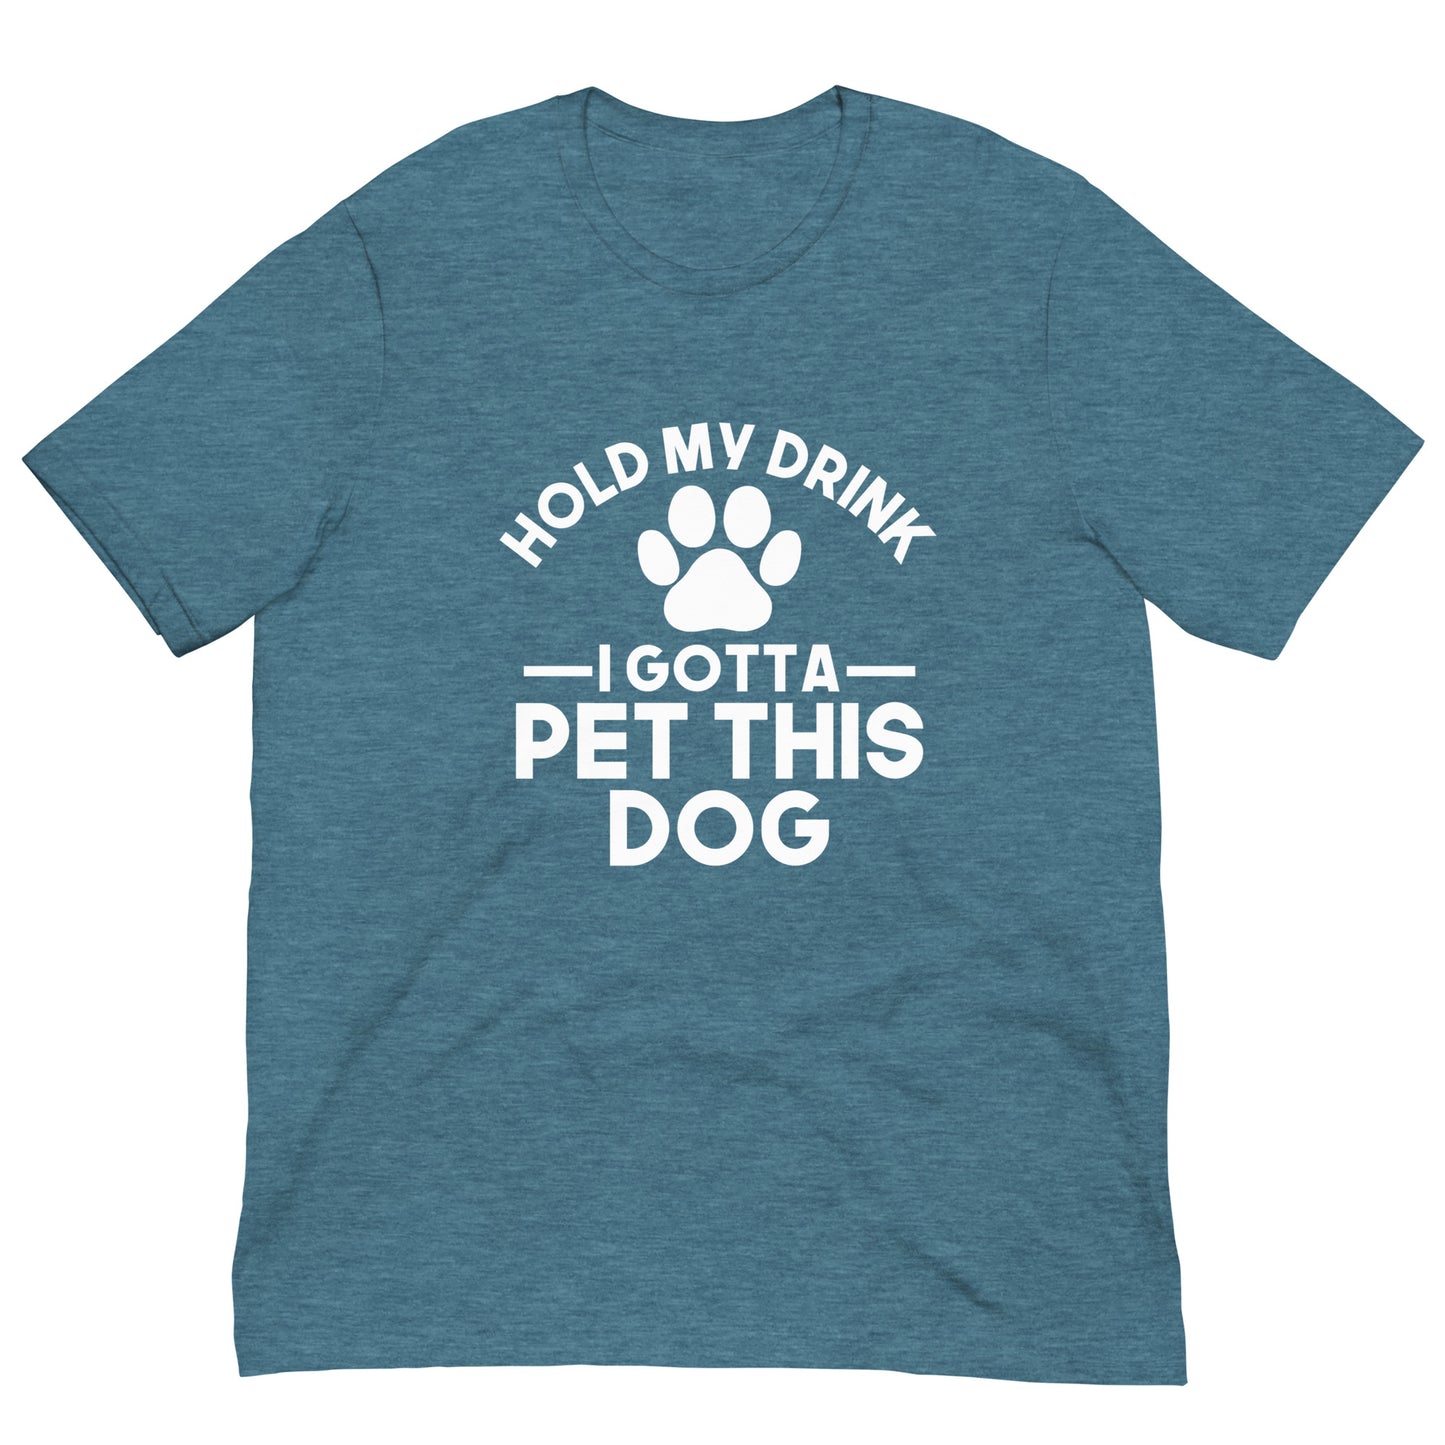 Hold my drink I gotta pet this dog T-shirt